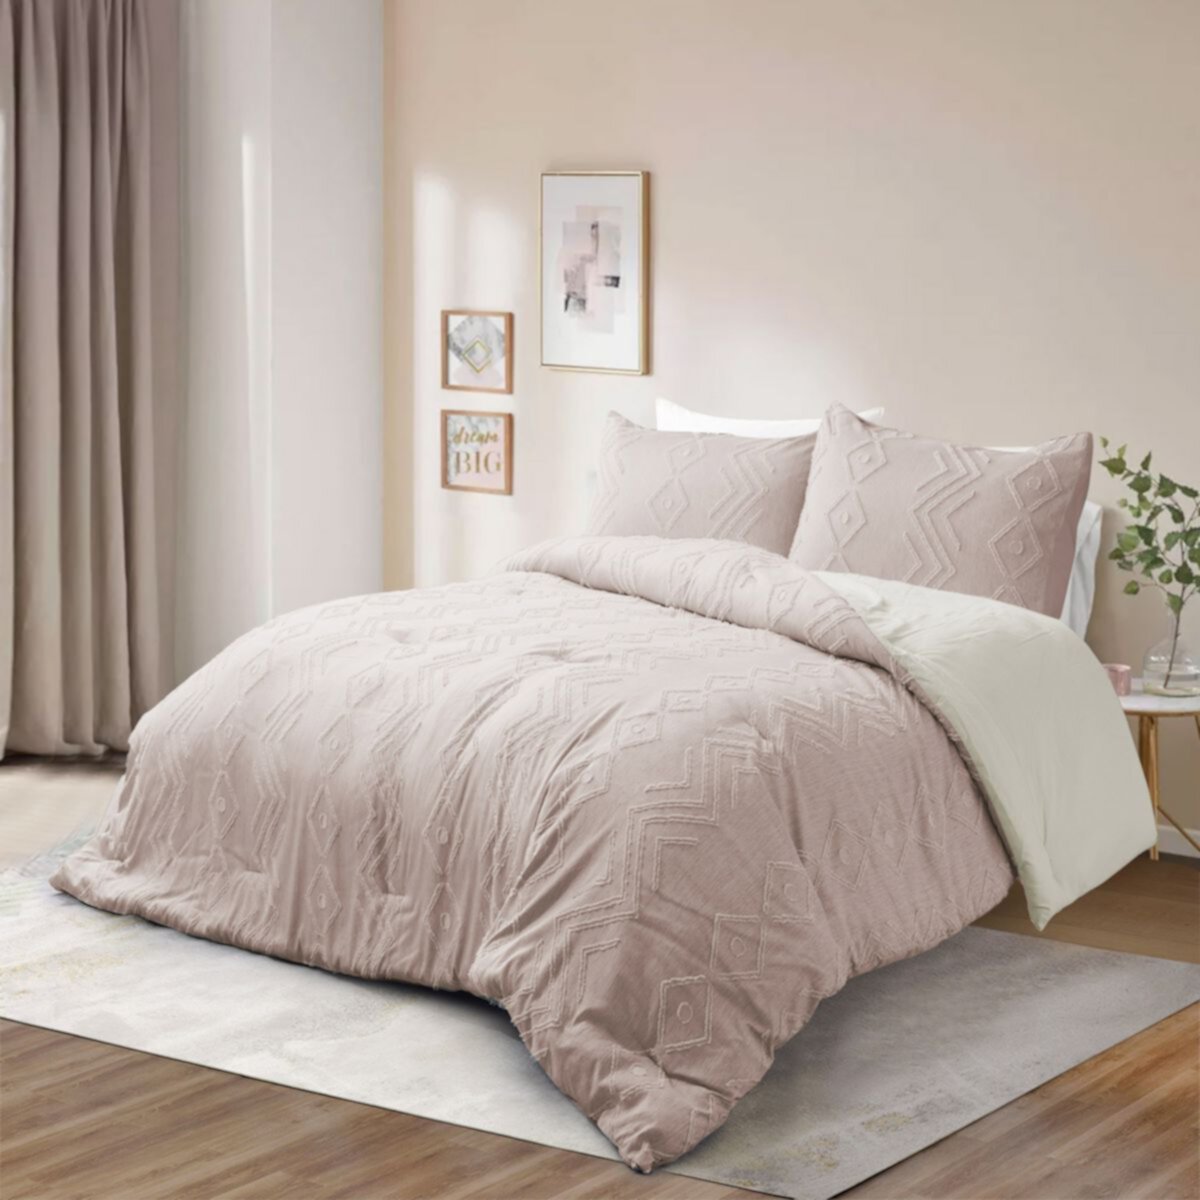 Unikome Soft Pinch Pleat Bedding Comforters-Down Alternative Comforter Set UNIKOME